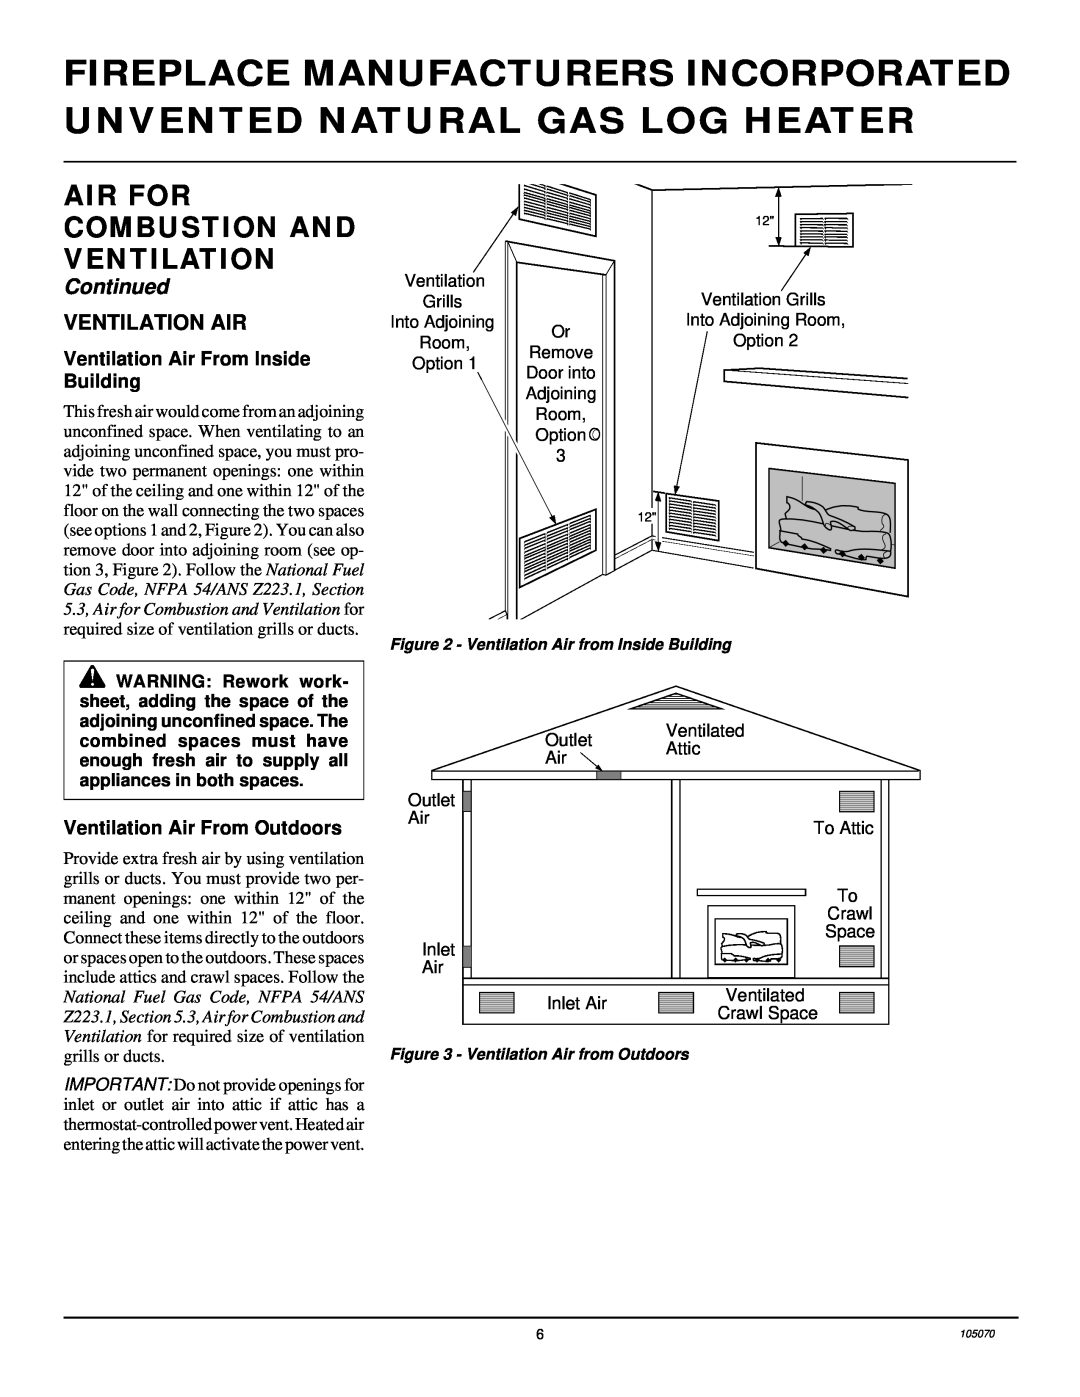 Desa VFN30MV Ventilation Air From Inside, Building, Ventilation Air From Outdoors, Air For Combustion And Ventilation 